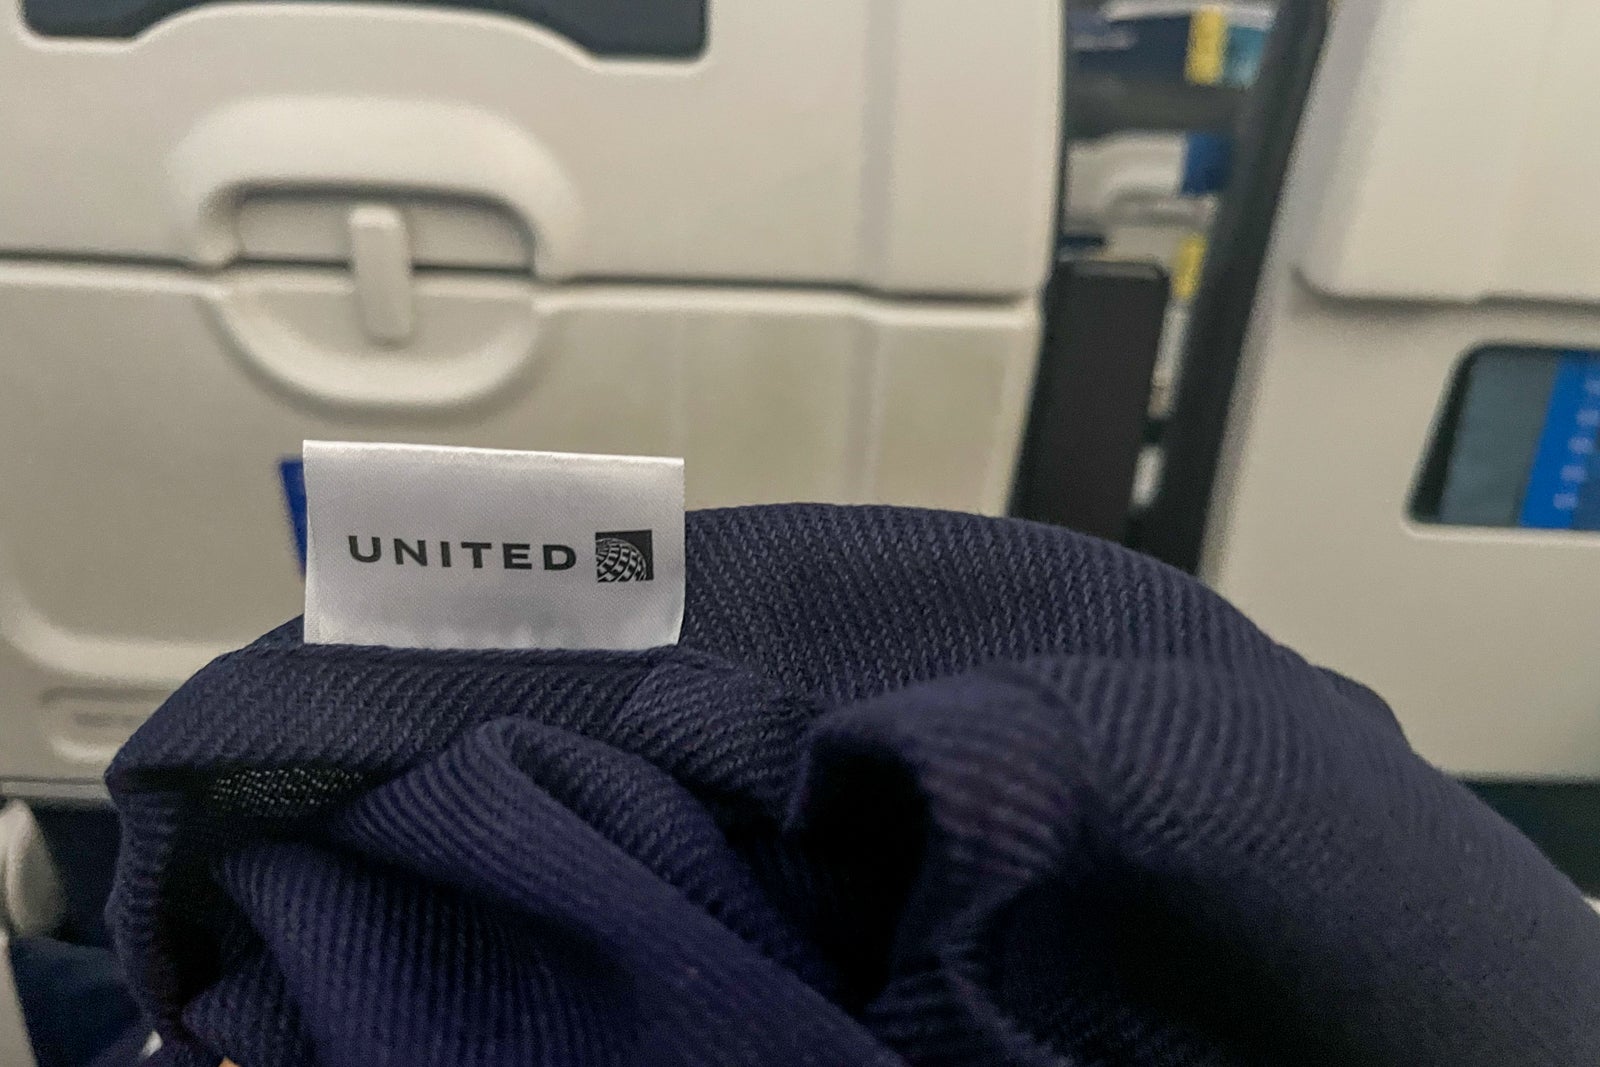 United Airlines blanket